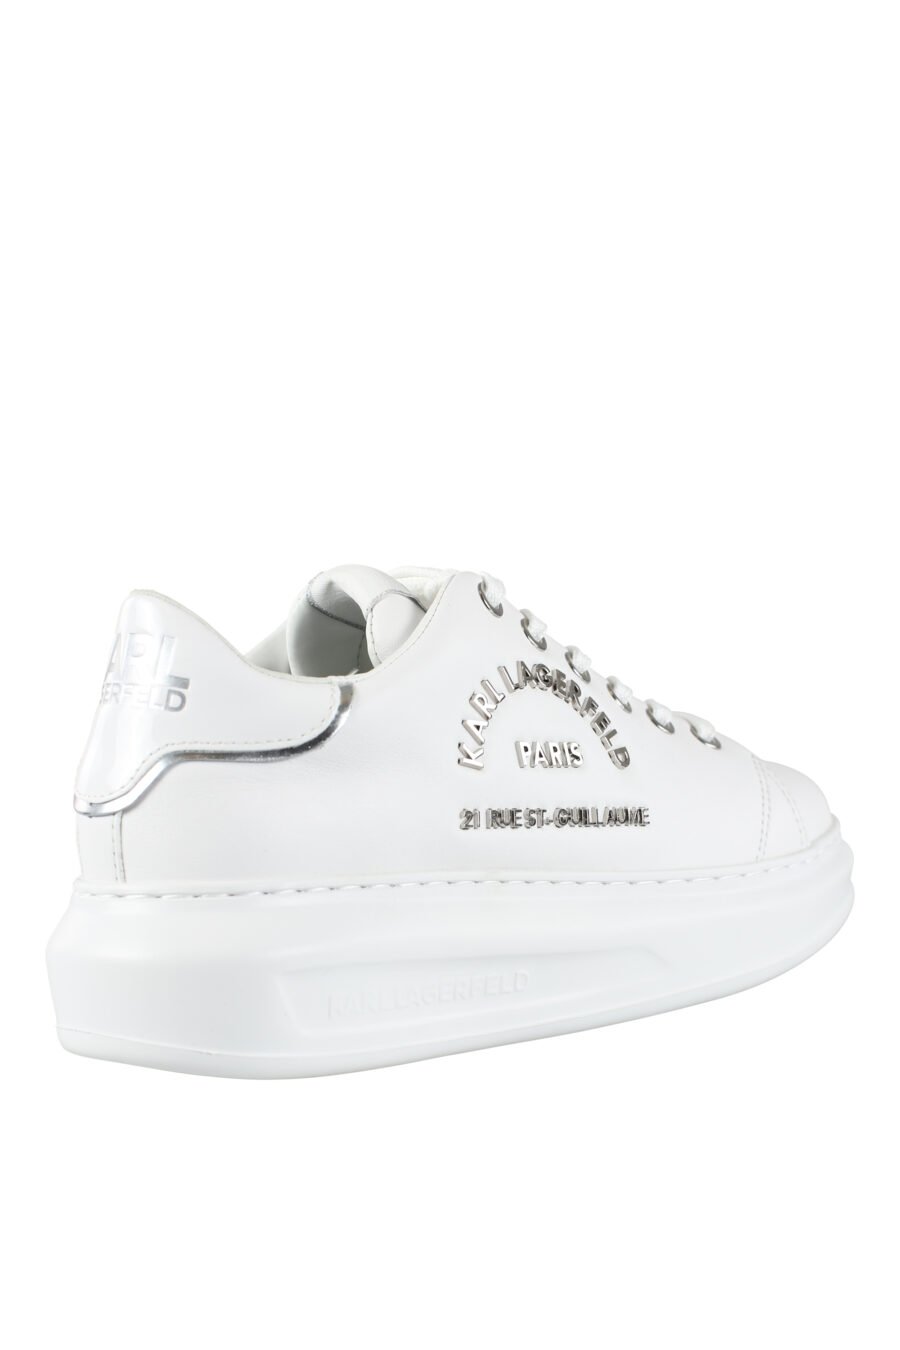 Zapatillas blancas con logo lettering "rue st guillaume" plateado - IMG 9567 1